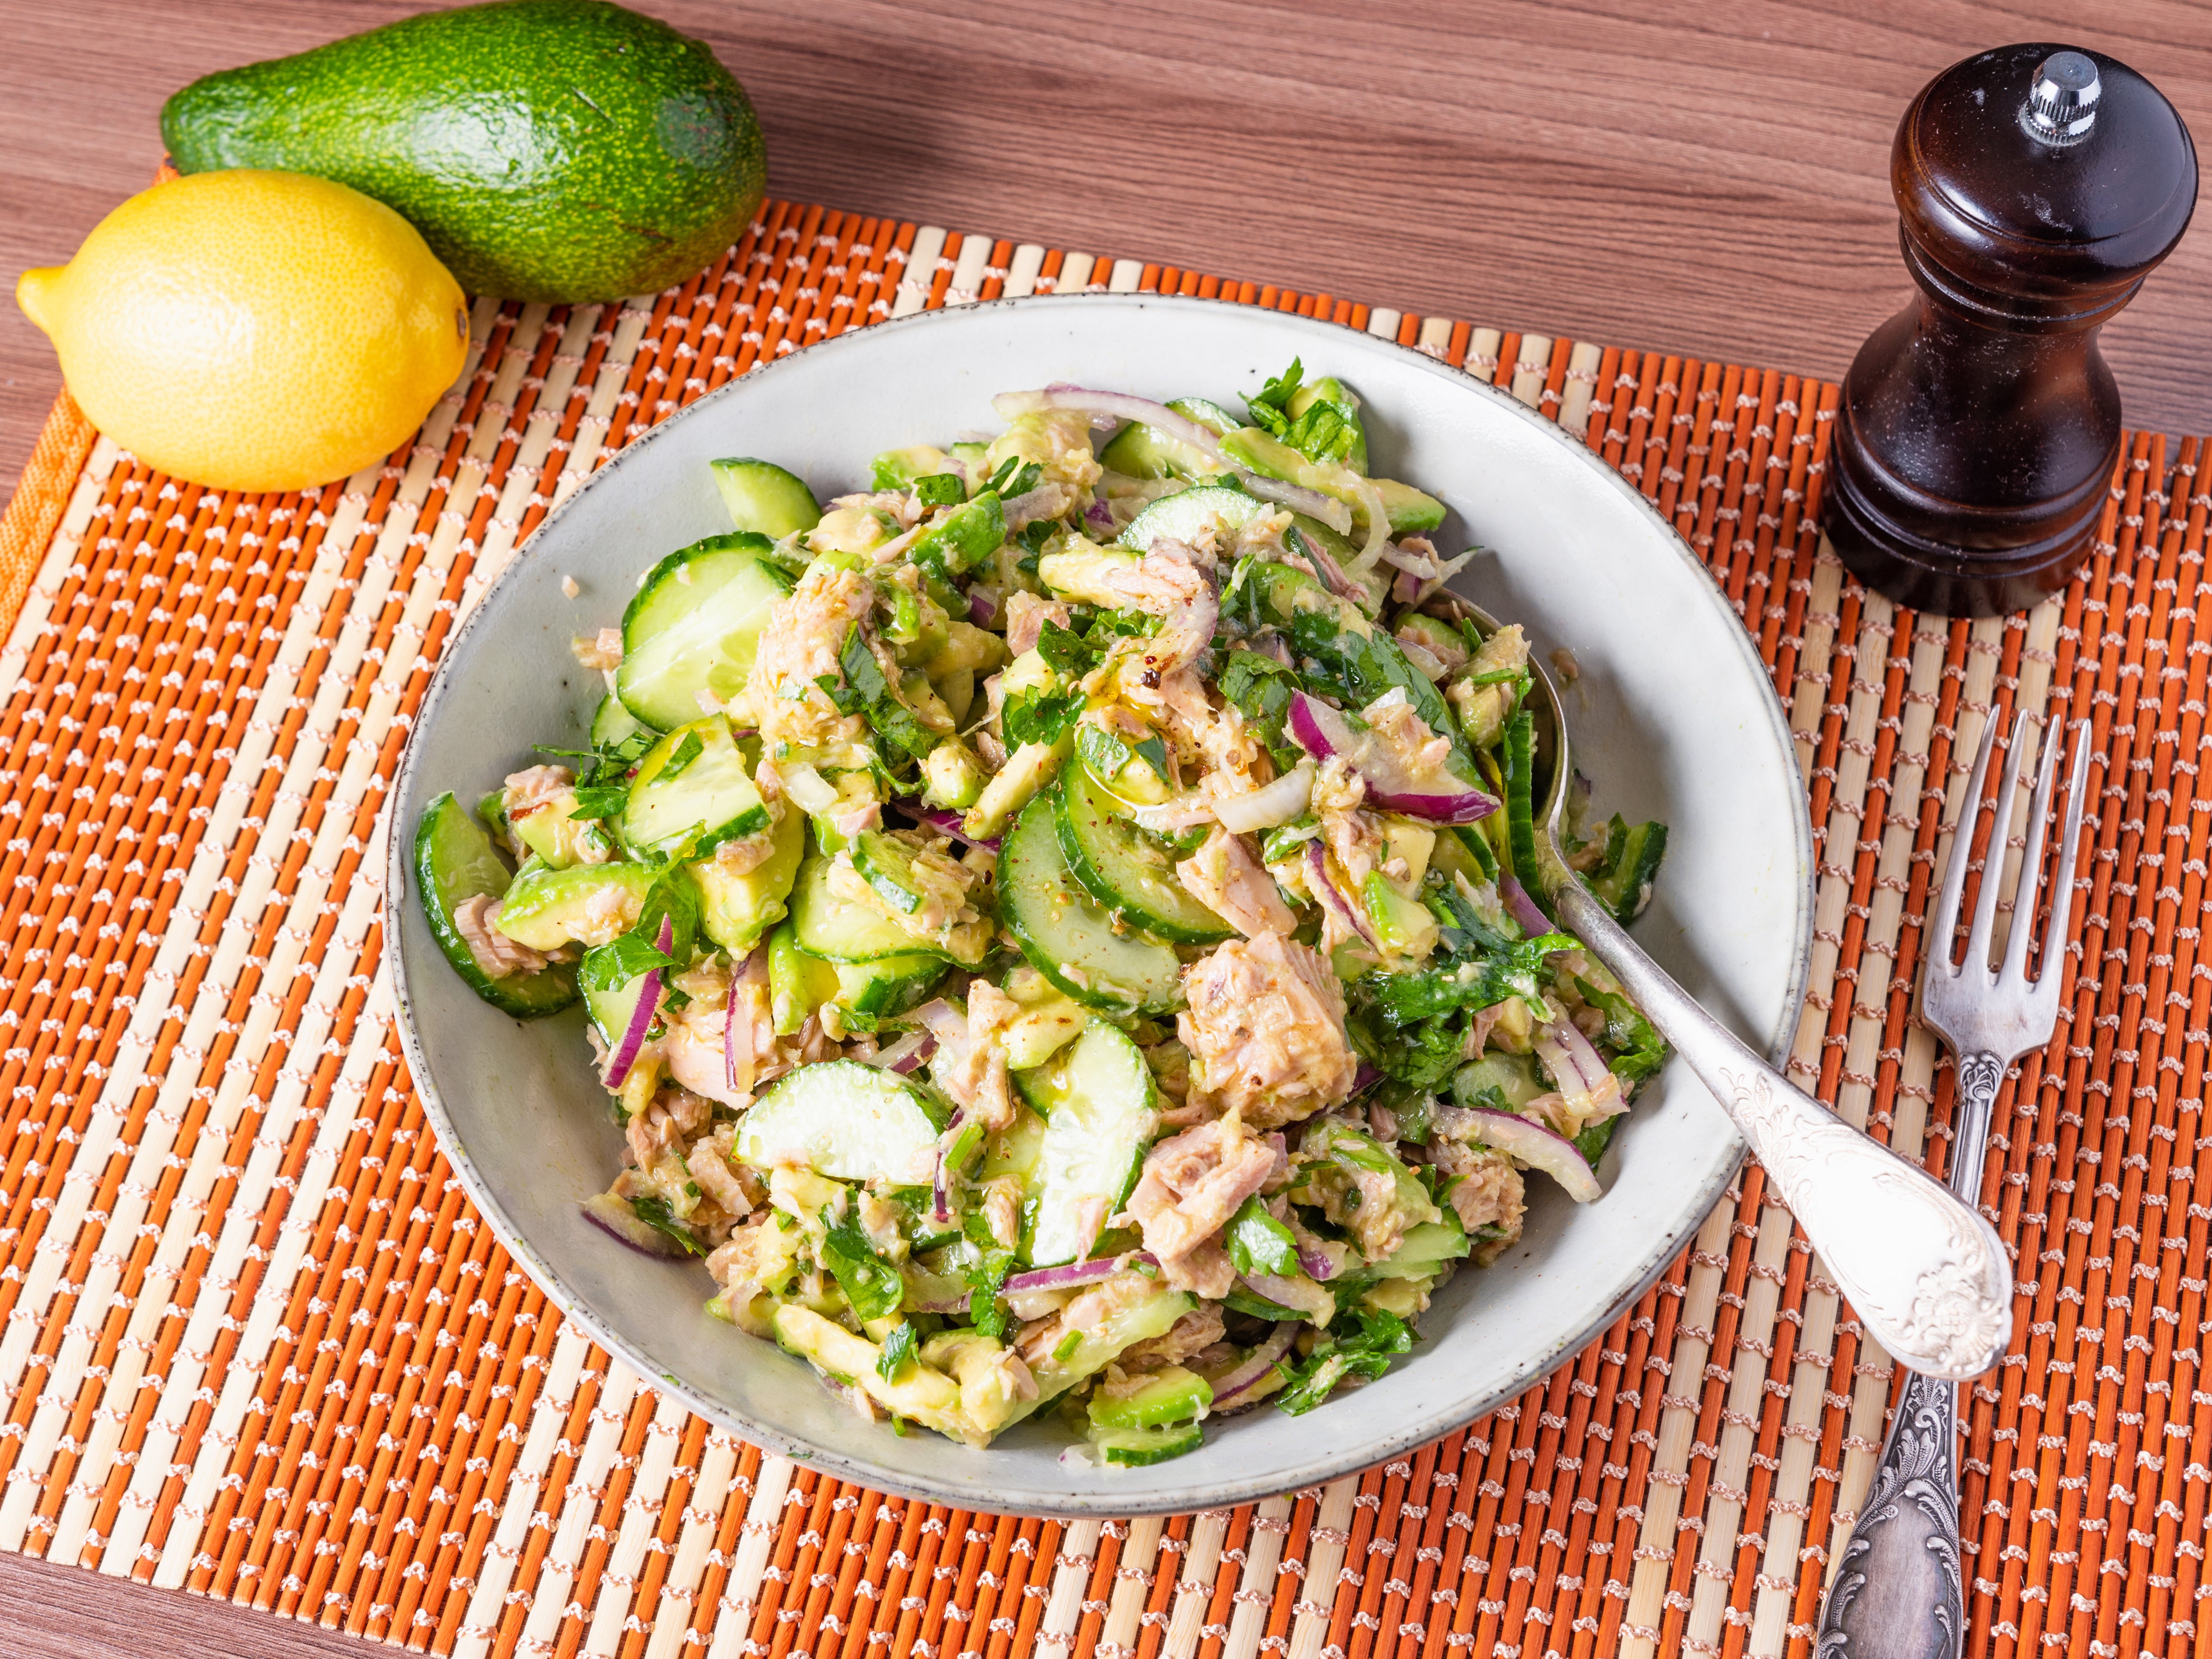 Chef Scarlett Lindeman’s tuna, avocado and cucumber salad